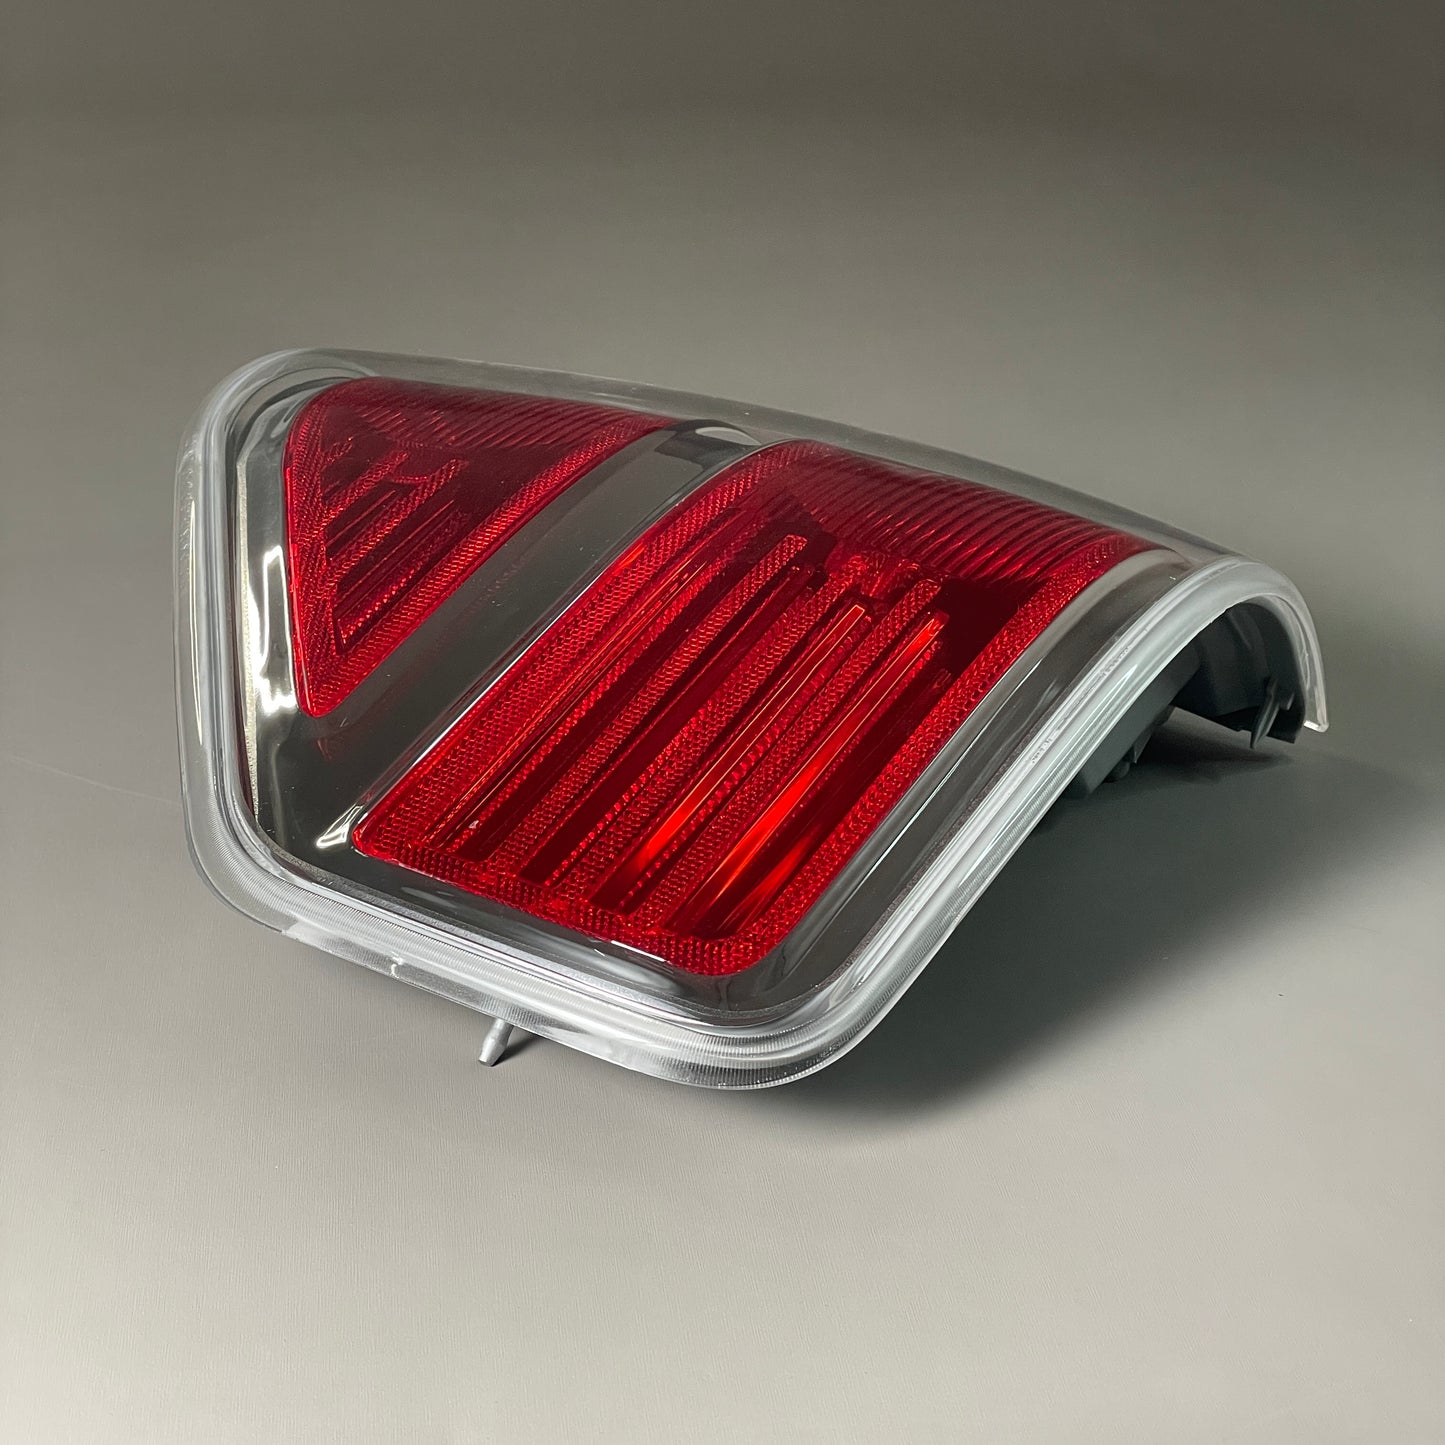 KEYSTONE Passenger Tail Light for Ford Pickup Lightduty 09-14 CAPA FO2819143C (New)